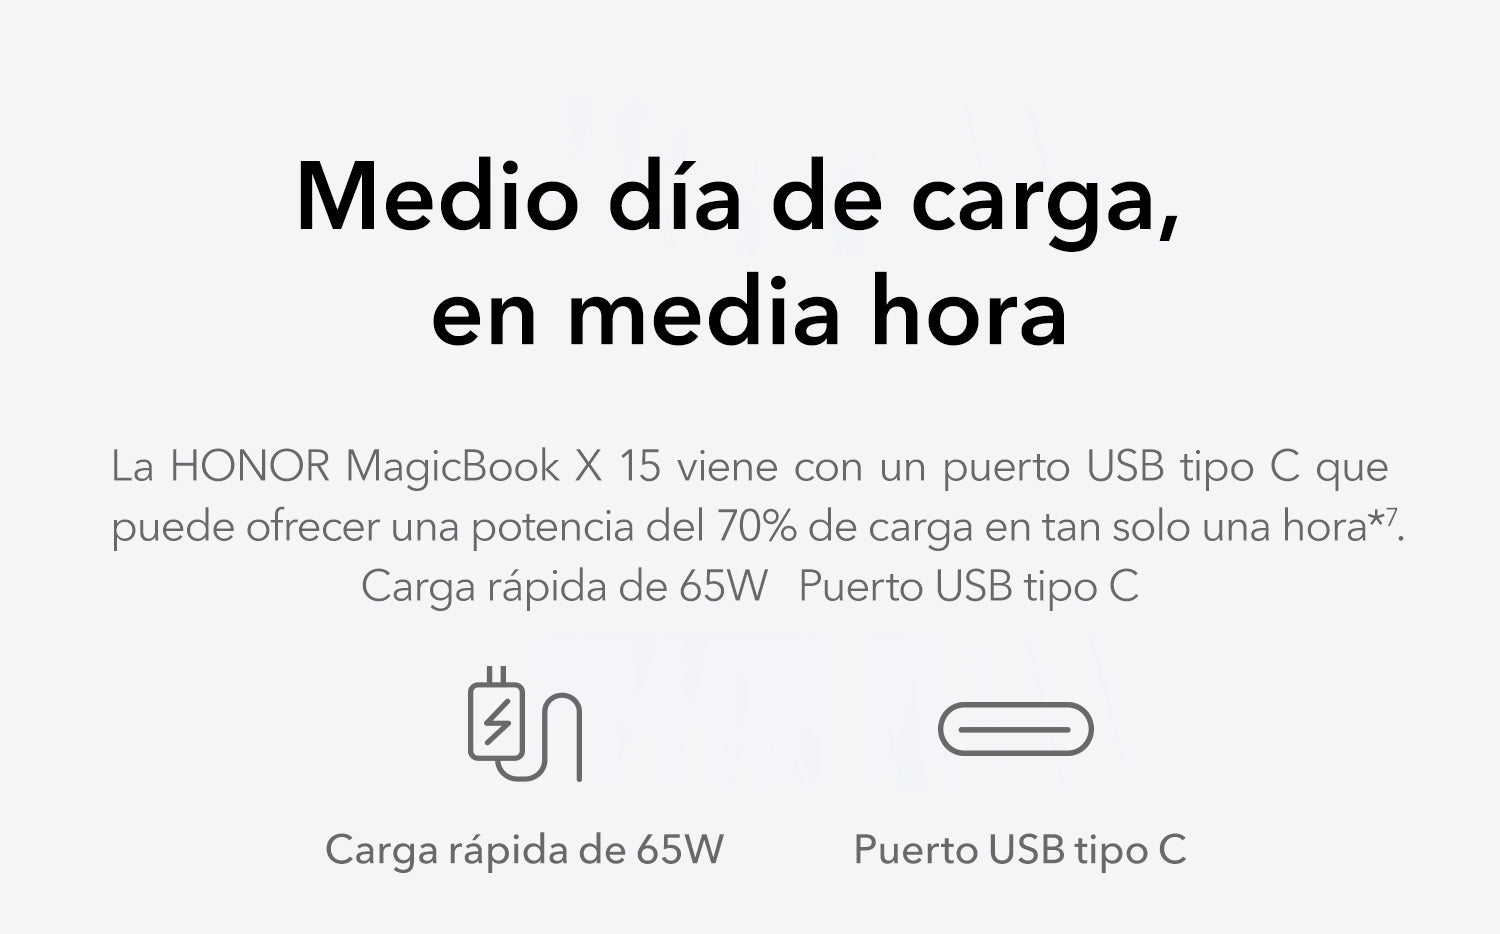 HONOR MagicBook X 15 Intel® Core™ i3-10110U, Windows 10 Home (8GB + 256G) Gris Espacial